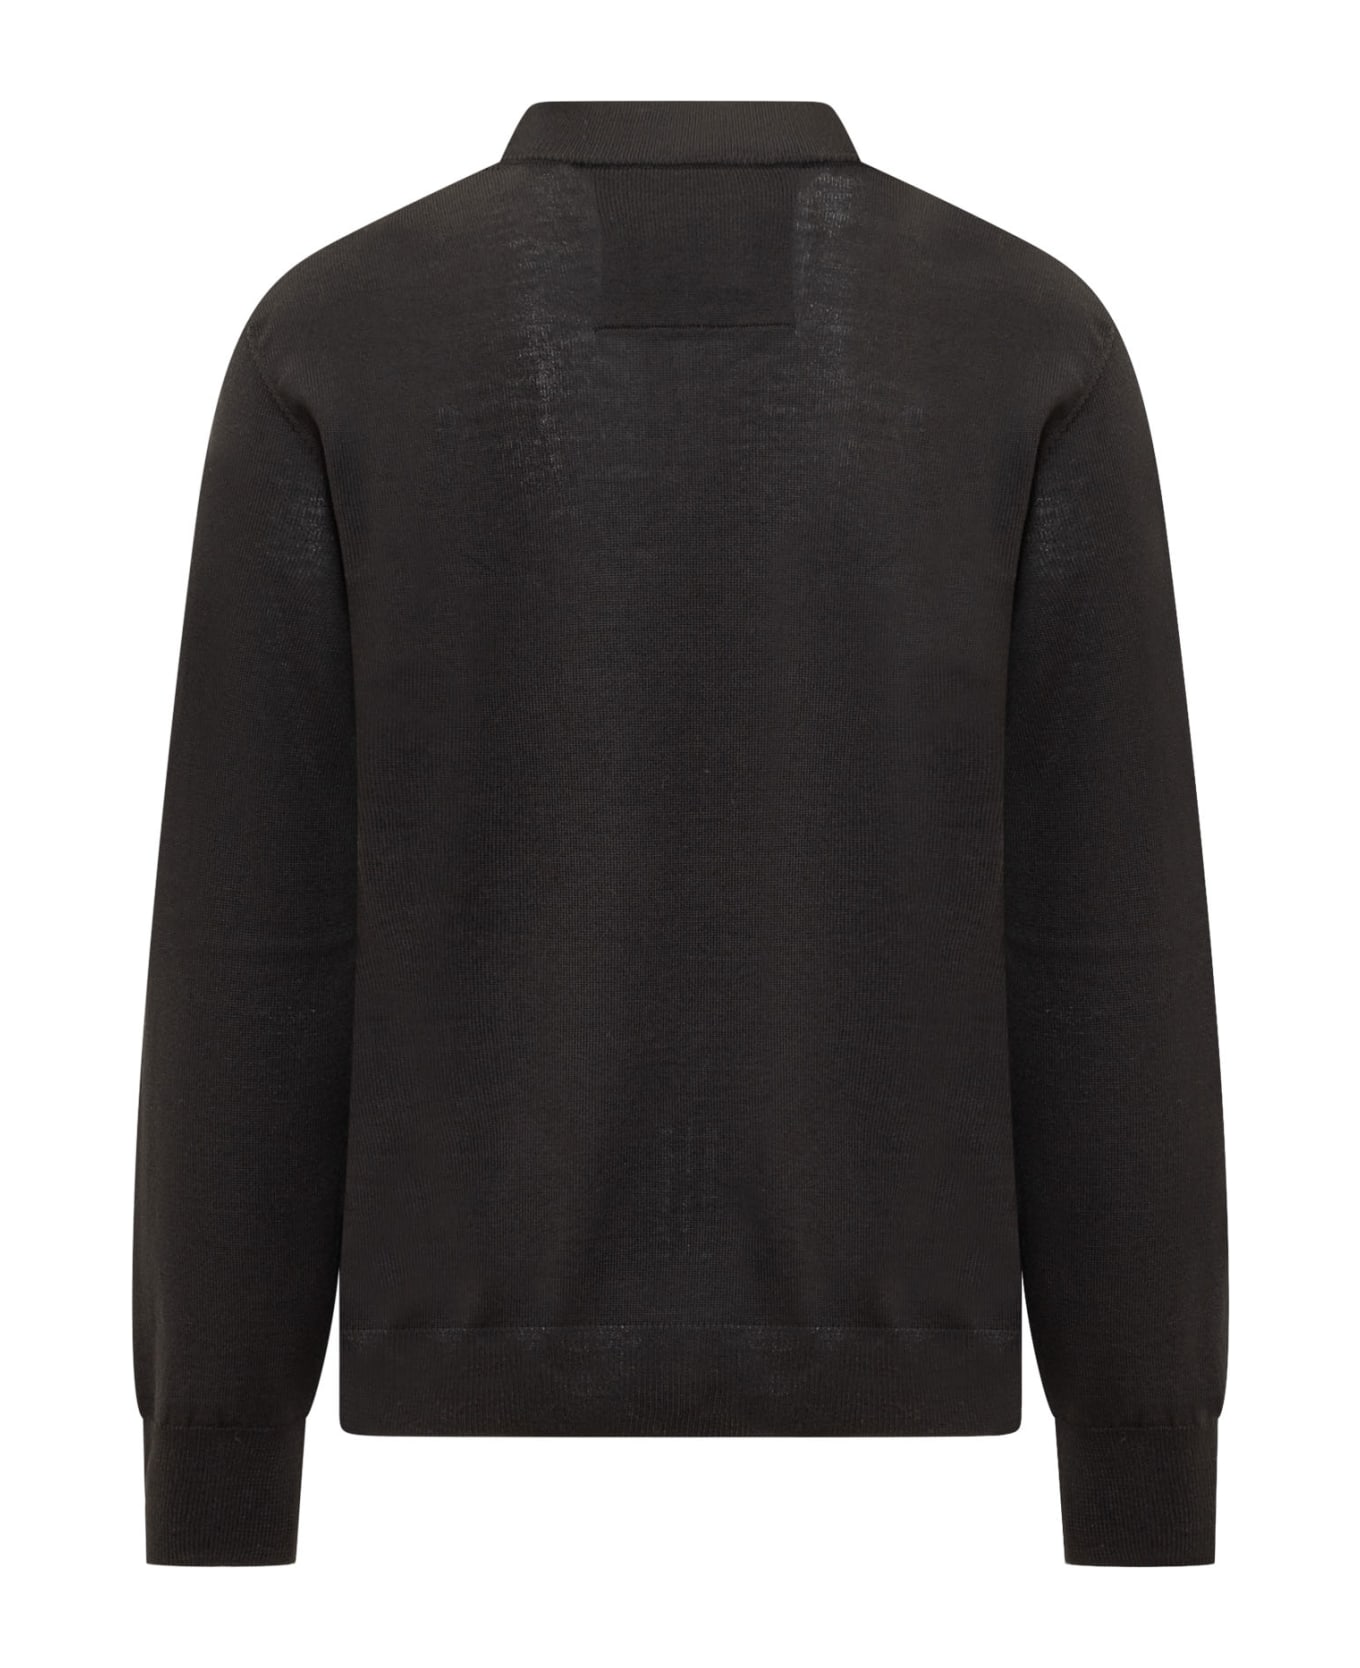 Givenchy Wool Logo Sweater - Black フリース